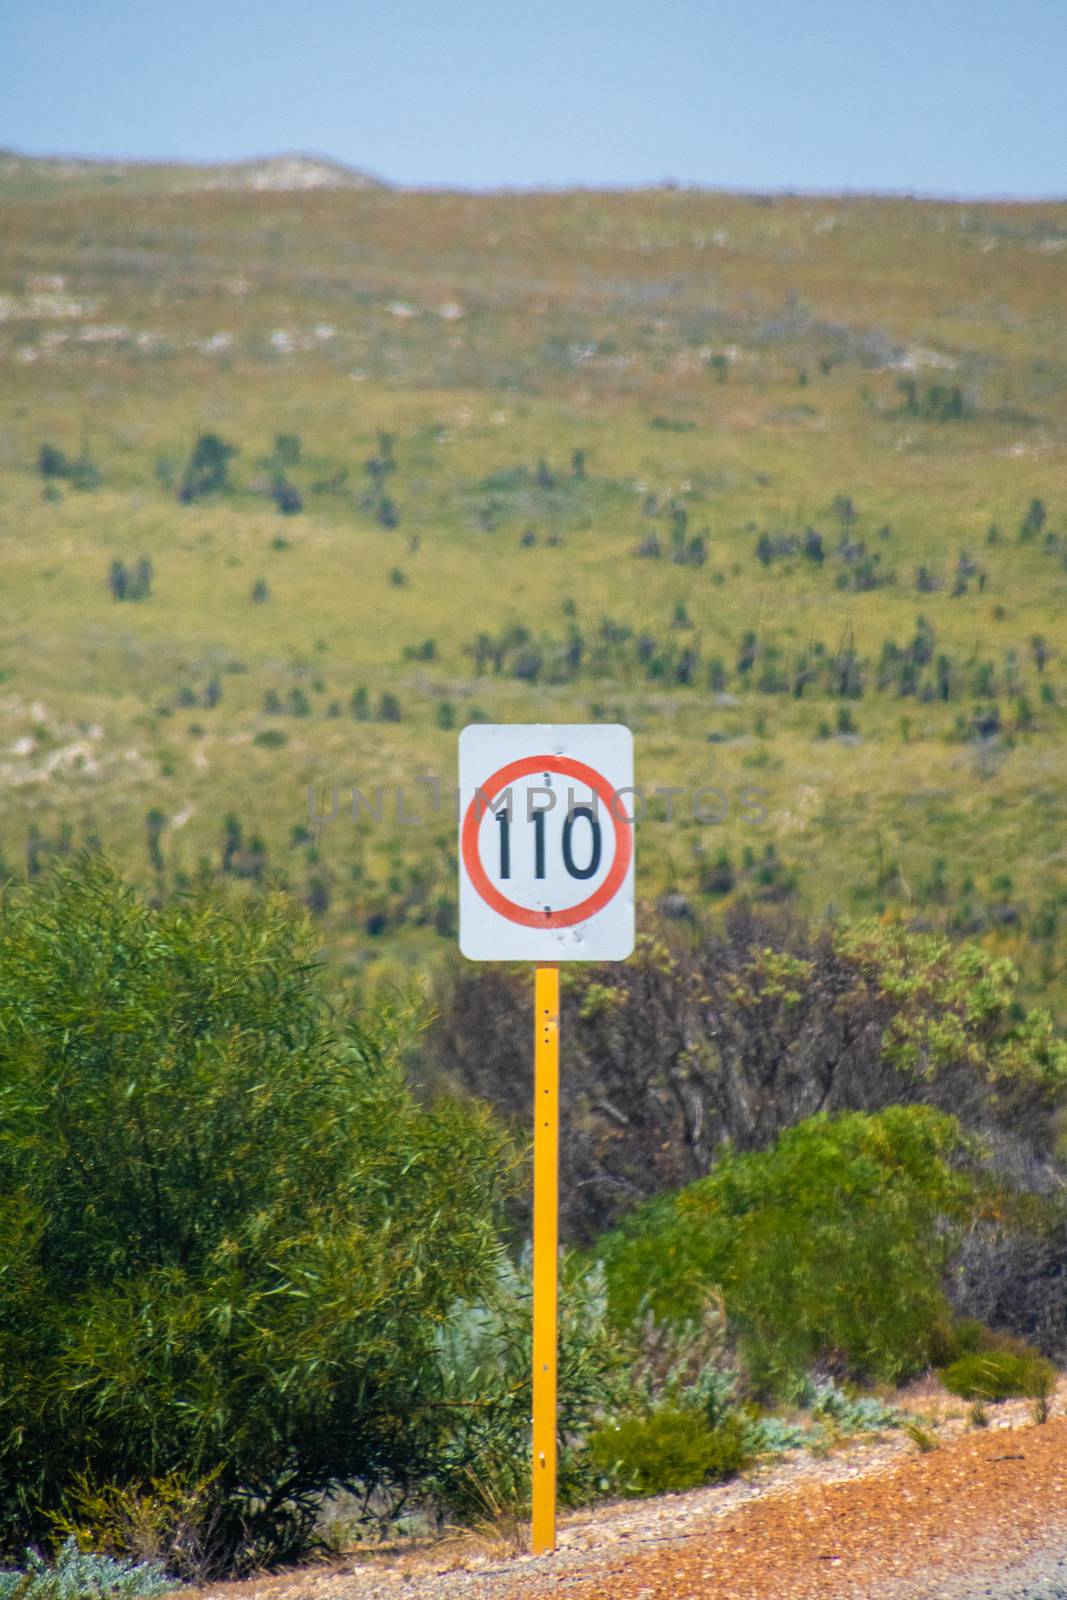 Speed limit 110 kph street sign next to Australian road by MXW_Stock